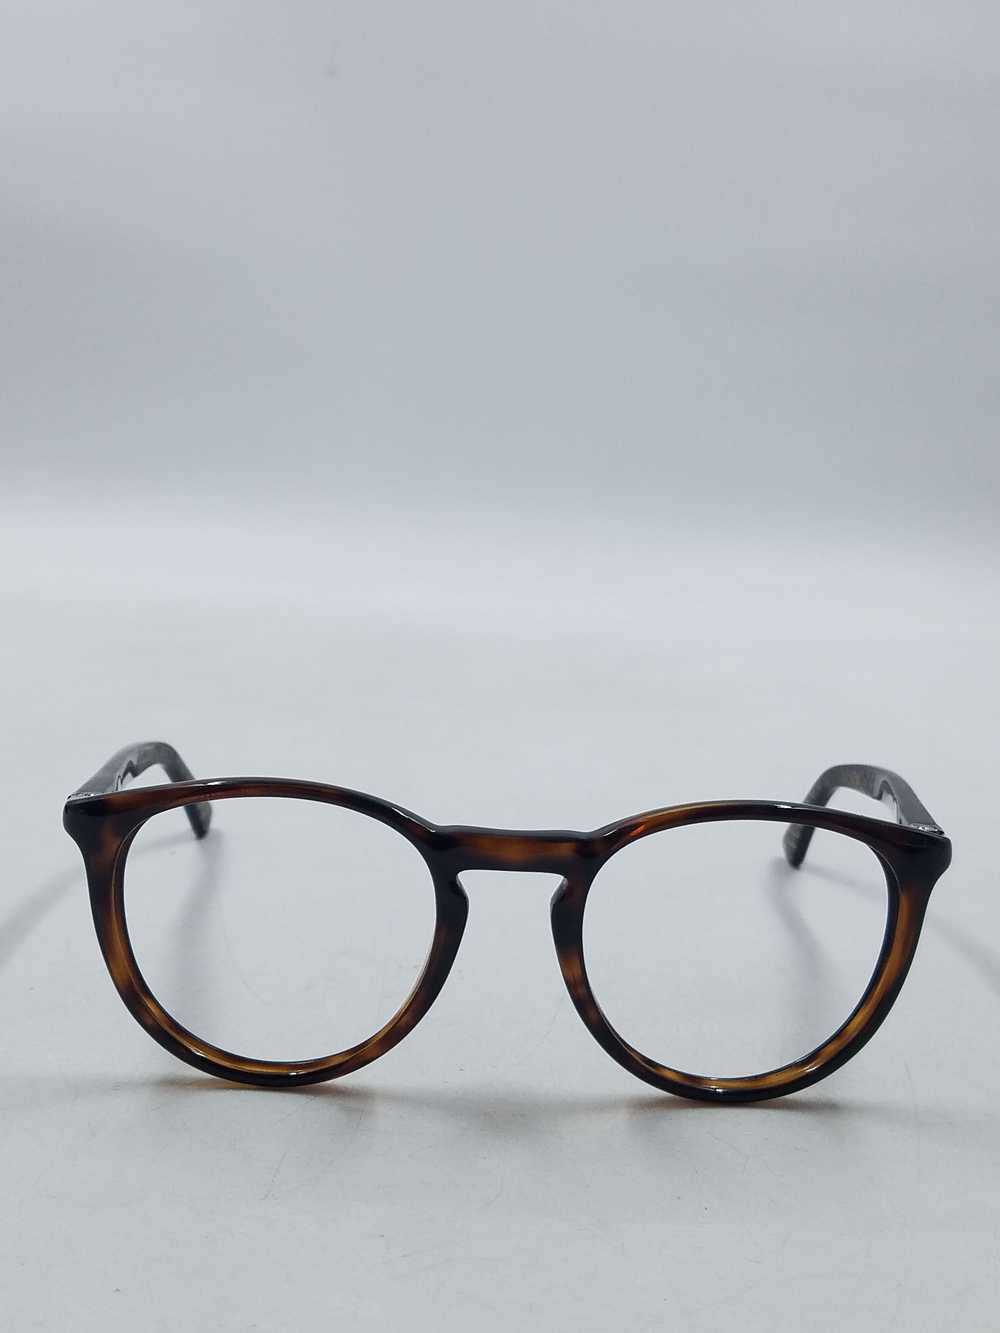 Gucci Tortoise Round Eyeglasses - image 2